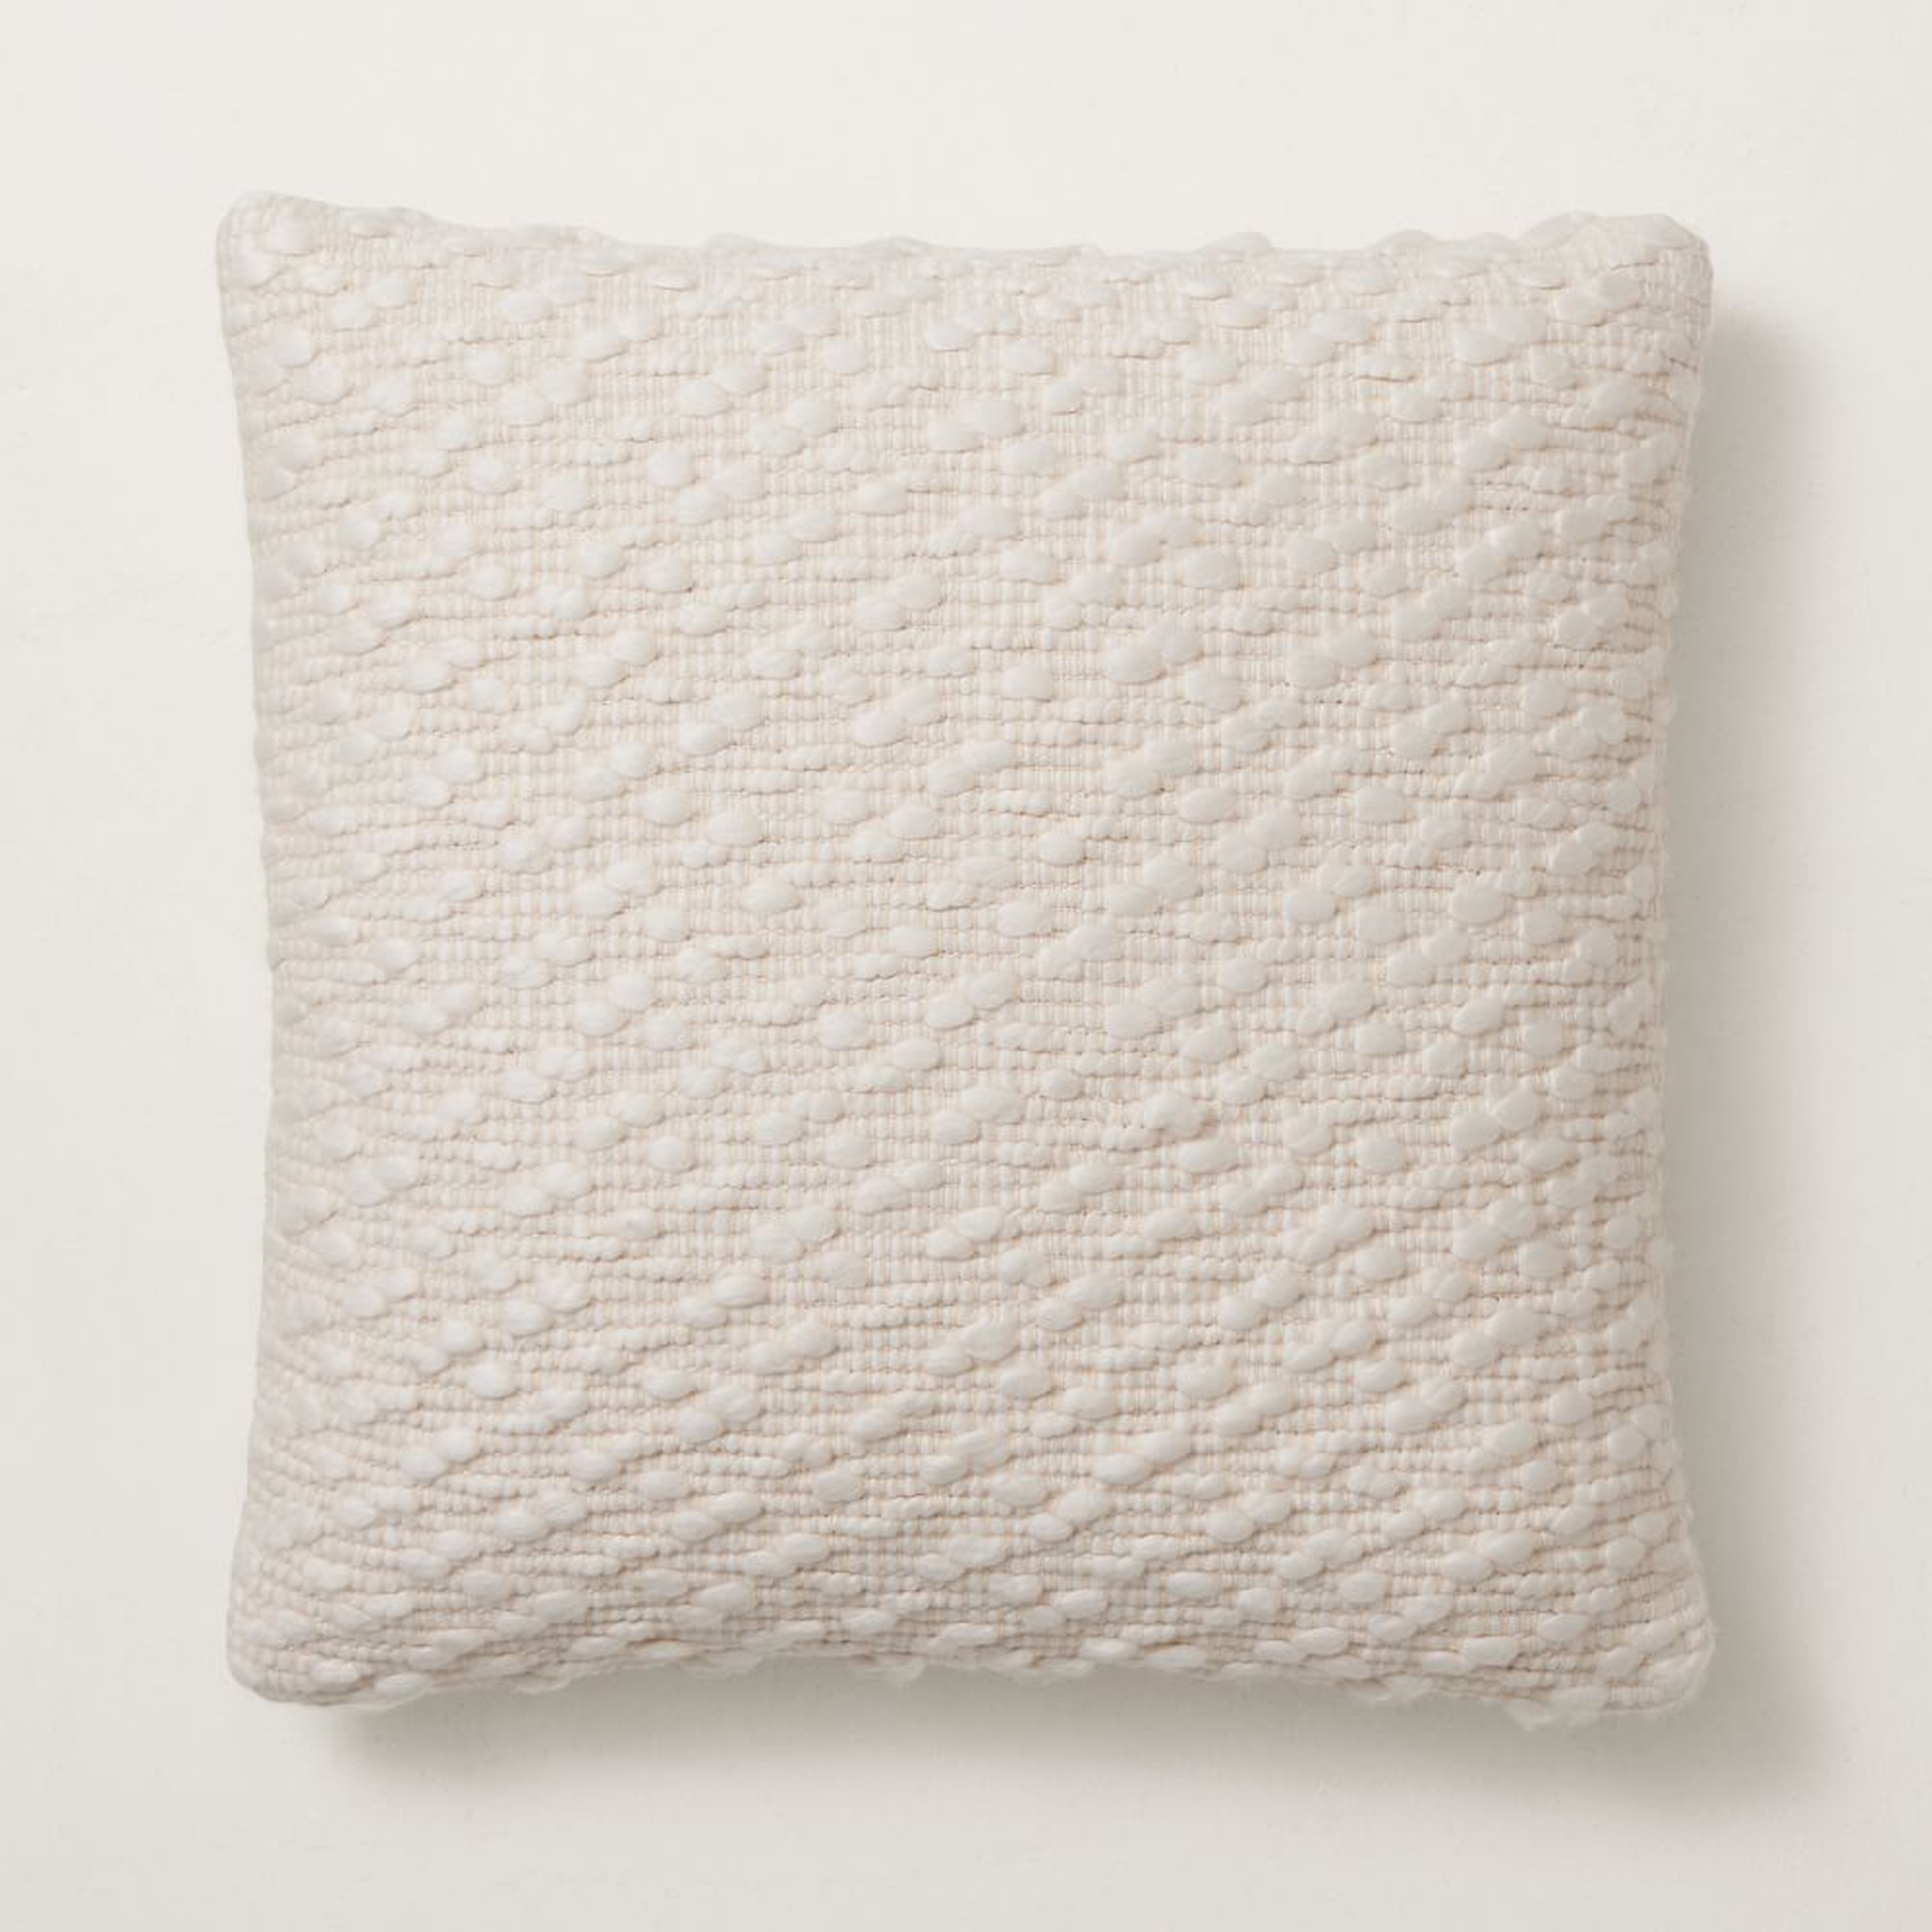 Soft Corded Bobble Pillow Cover, 18"x18", Natural Canvas, Set of 2 - West Elm